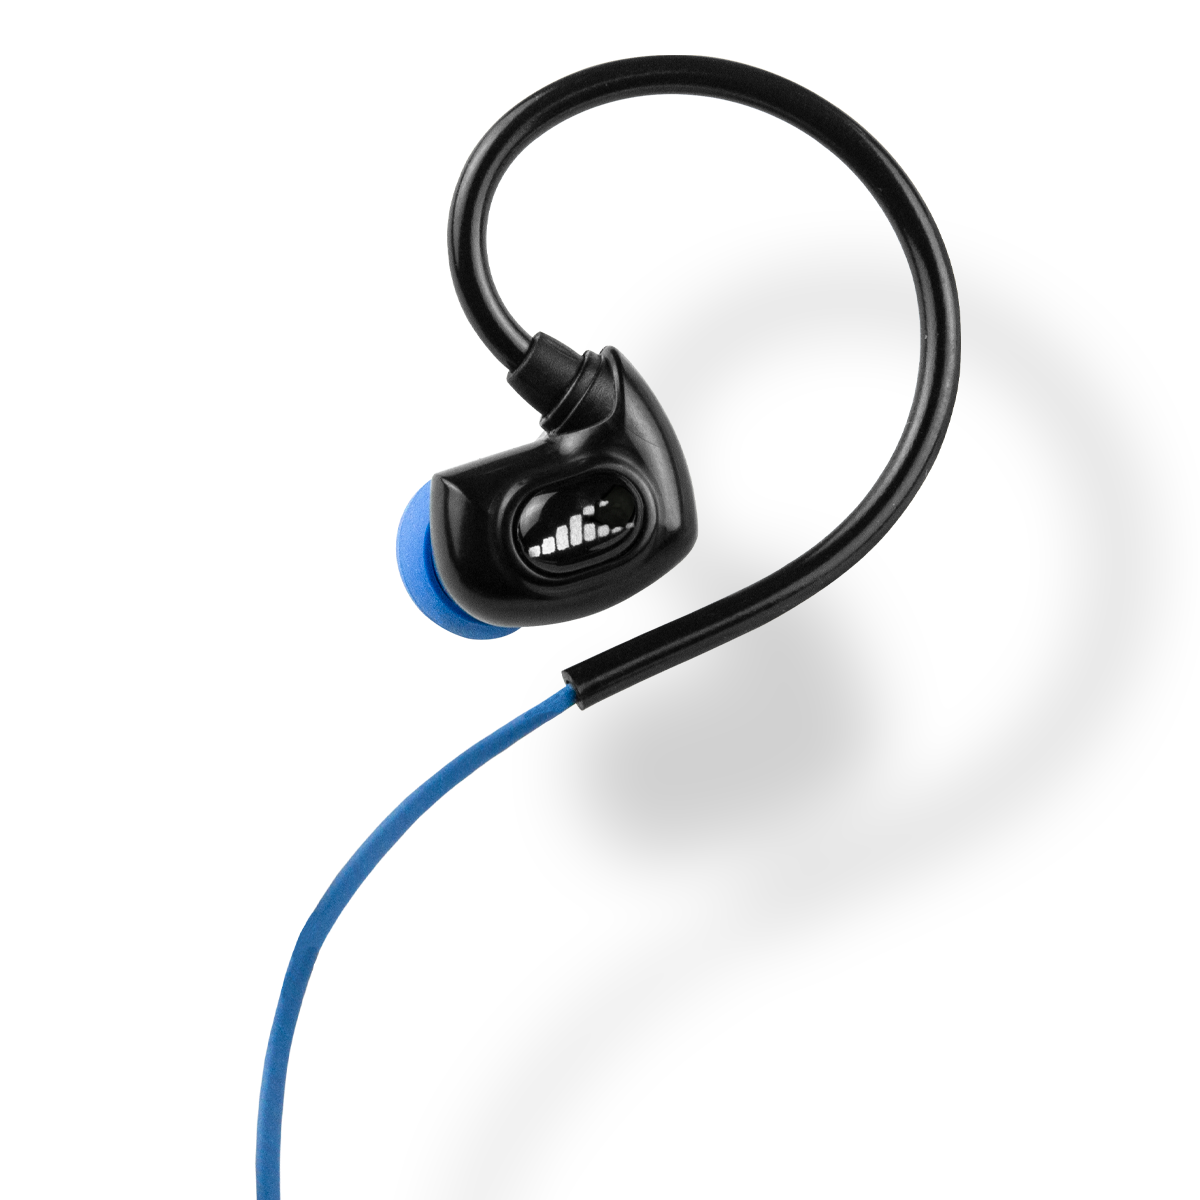 SURGE SX10-SHORT Waterproof Sport Headphones (Short Cord)